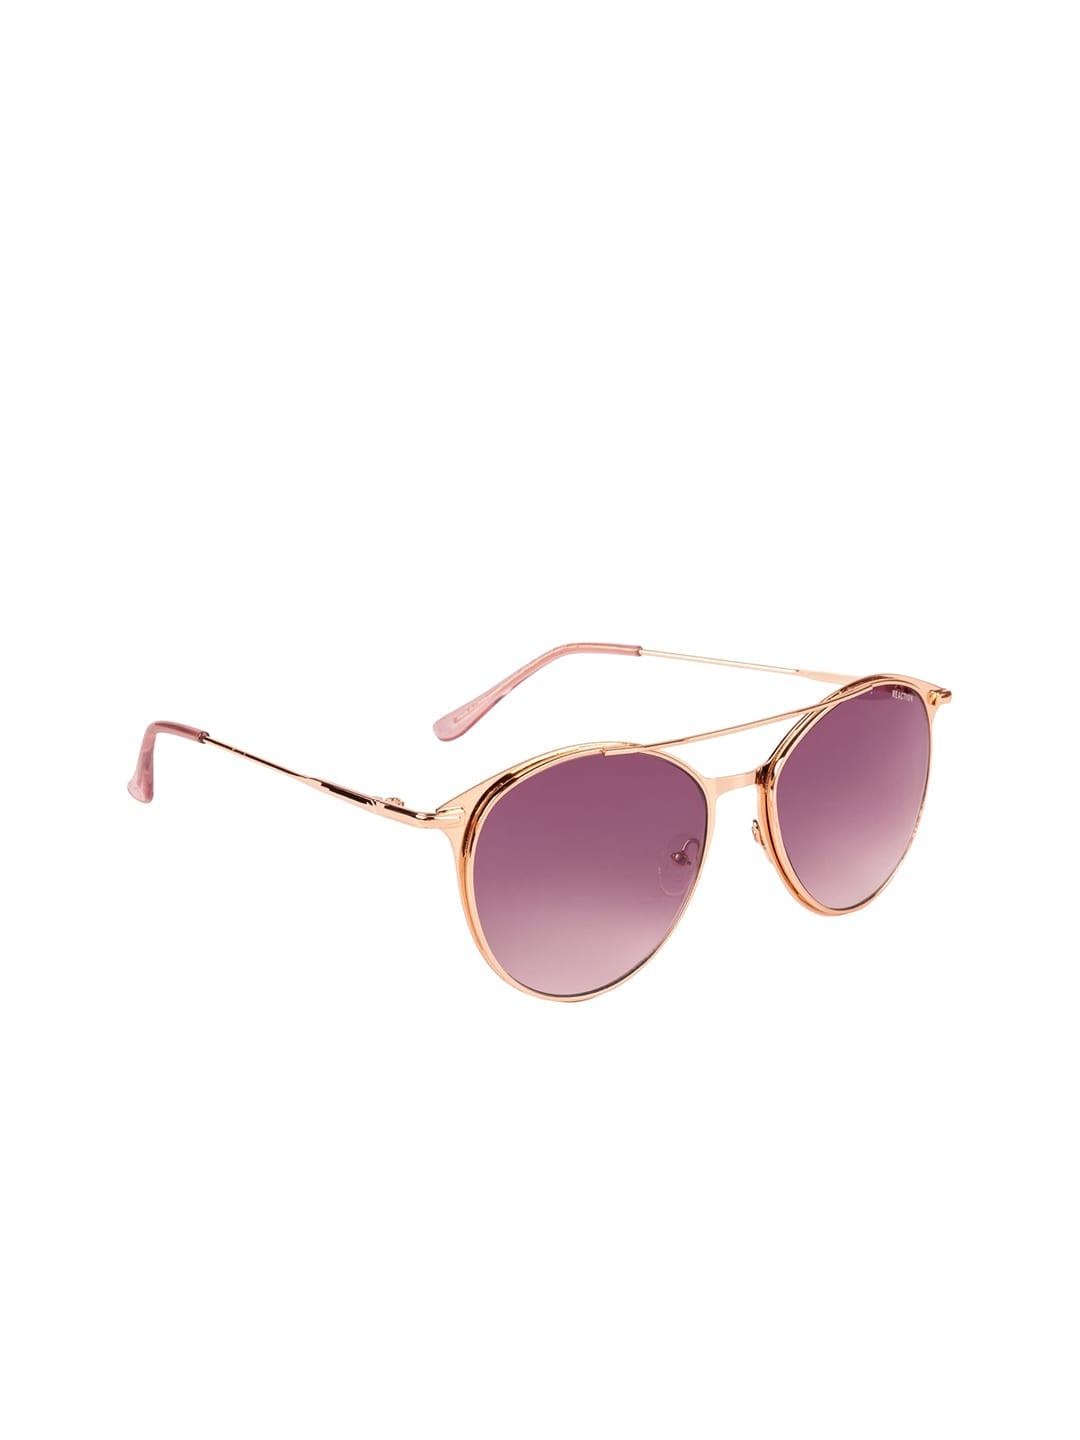 kenneth-cole-men-round-sunglasses-kc1353-55-28y